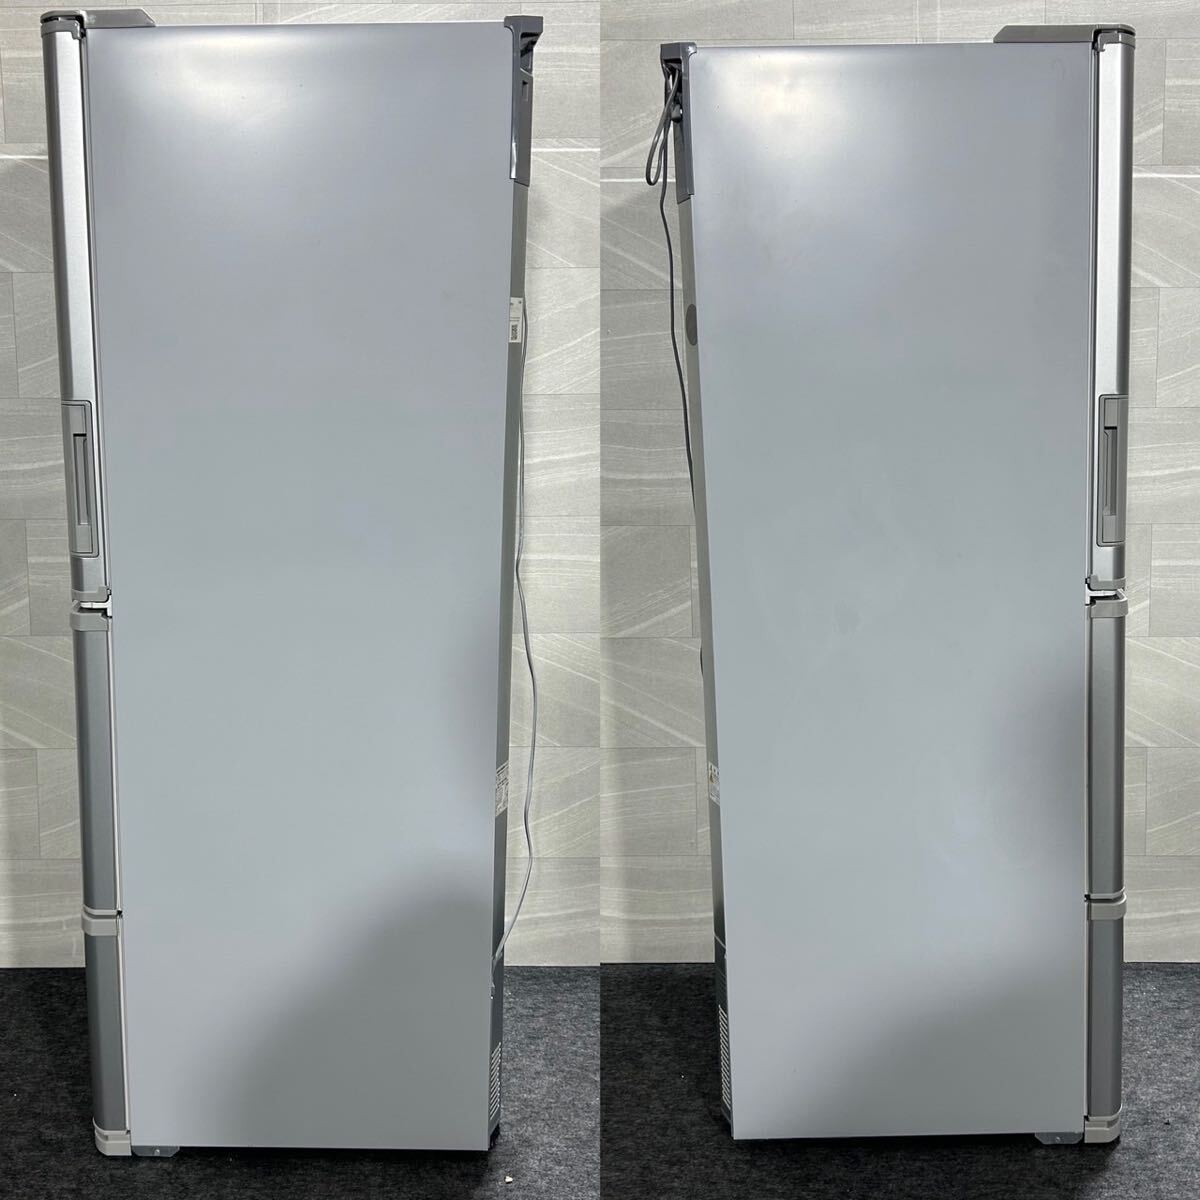 SHARP 冷蔵庫 SJ-W351D-S 350L 大容量 2019年製 左右両開き どっちもドア 家電 d1857 格安 お買い得_画像9